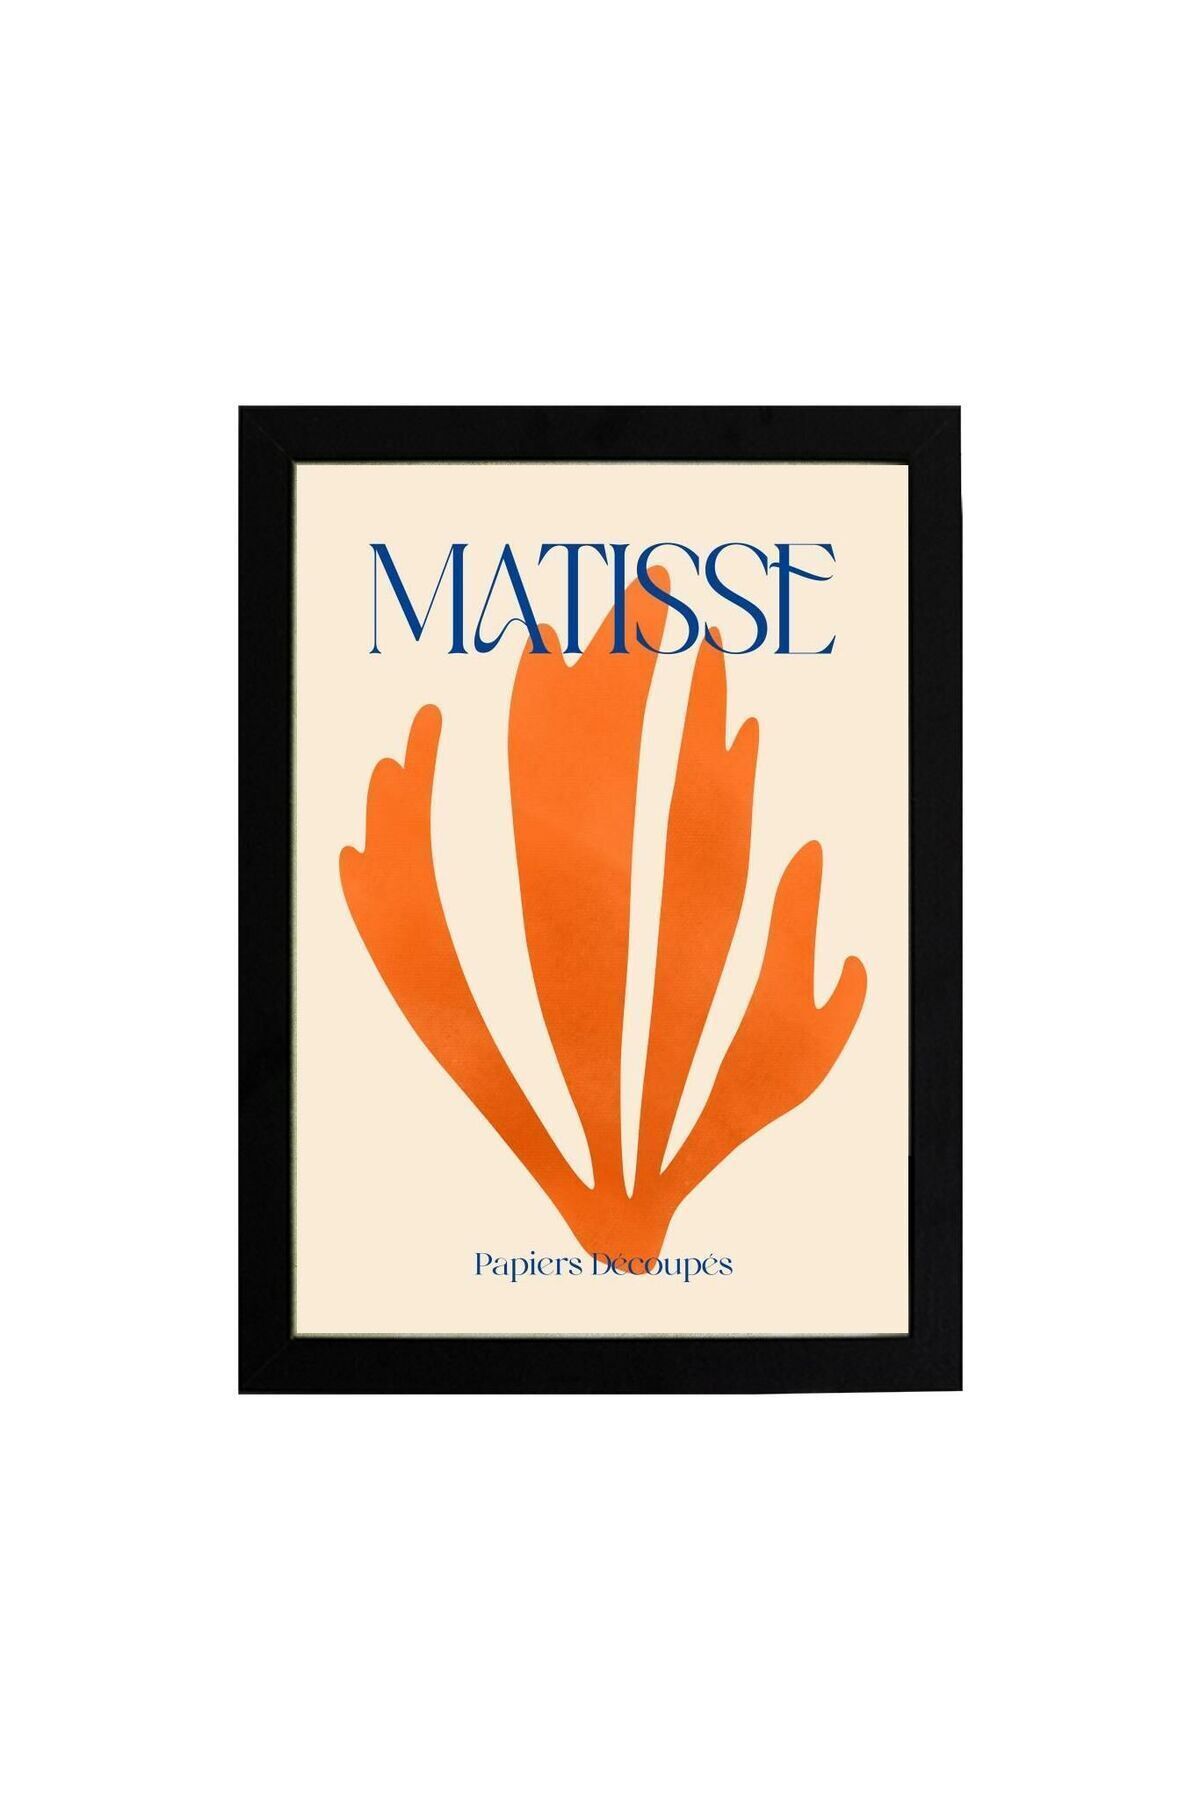 KAYNOCK Matisse 4, Henri Matisse, Modern, Contemporary Art, Poster Tablo Dijital Tasarım